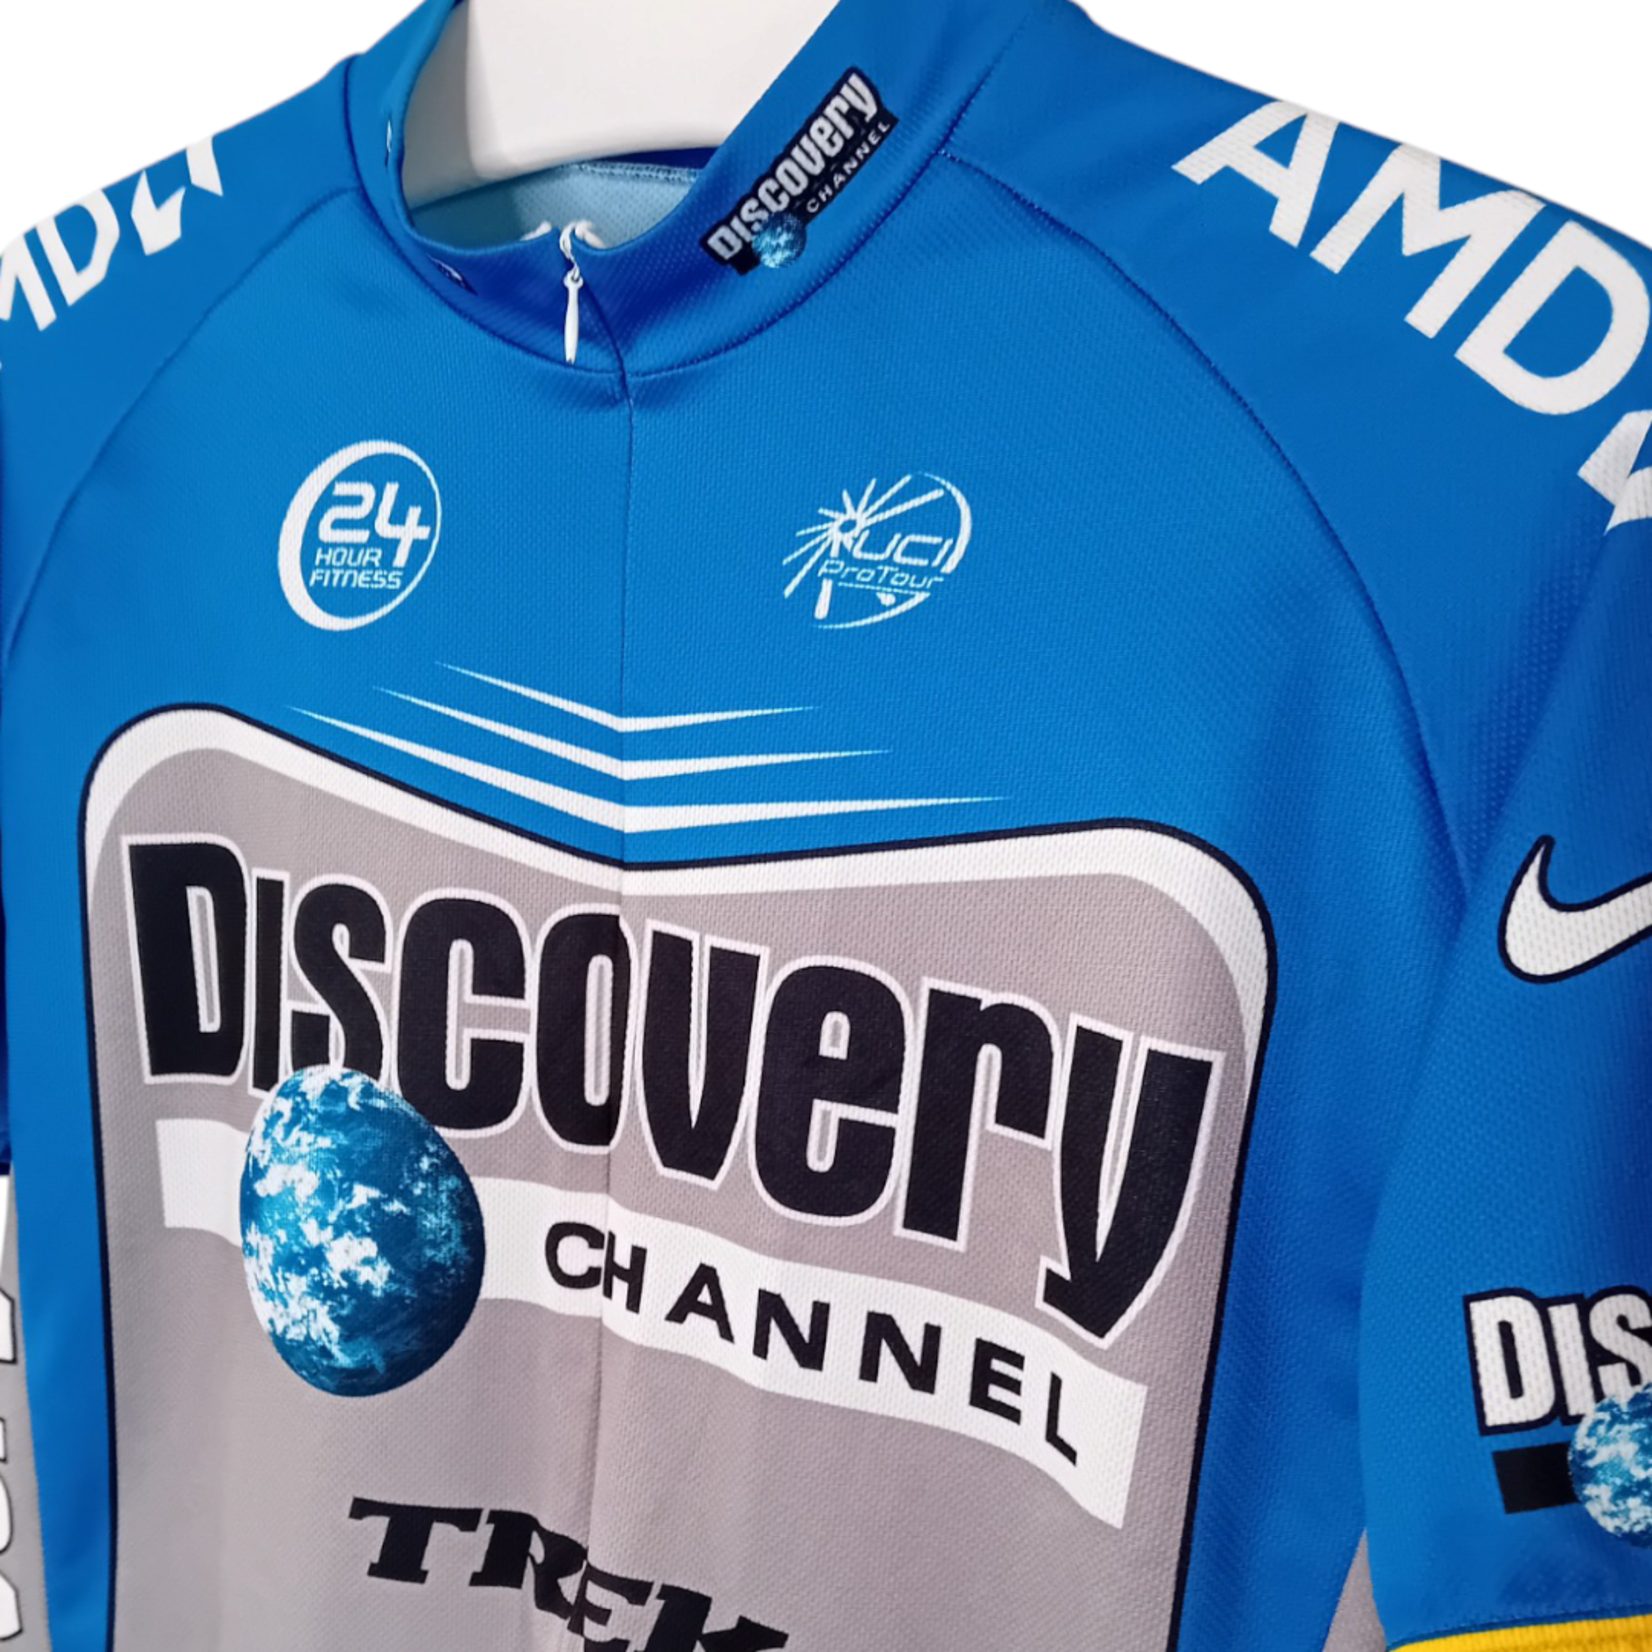 Nike Origineel Nike vintage wielershirt Discovery Channel Pro Cycling 2006